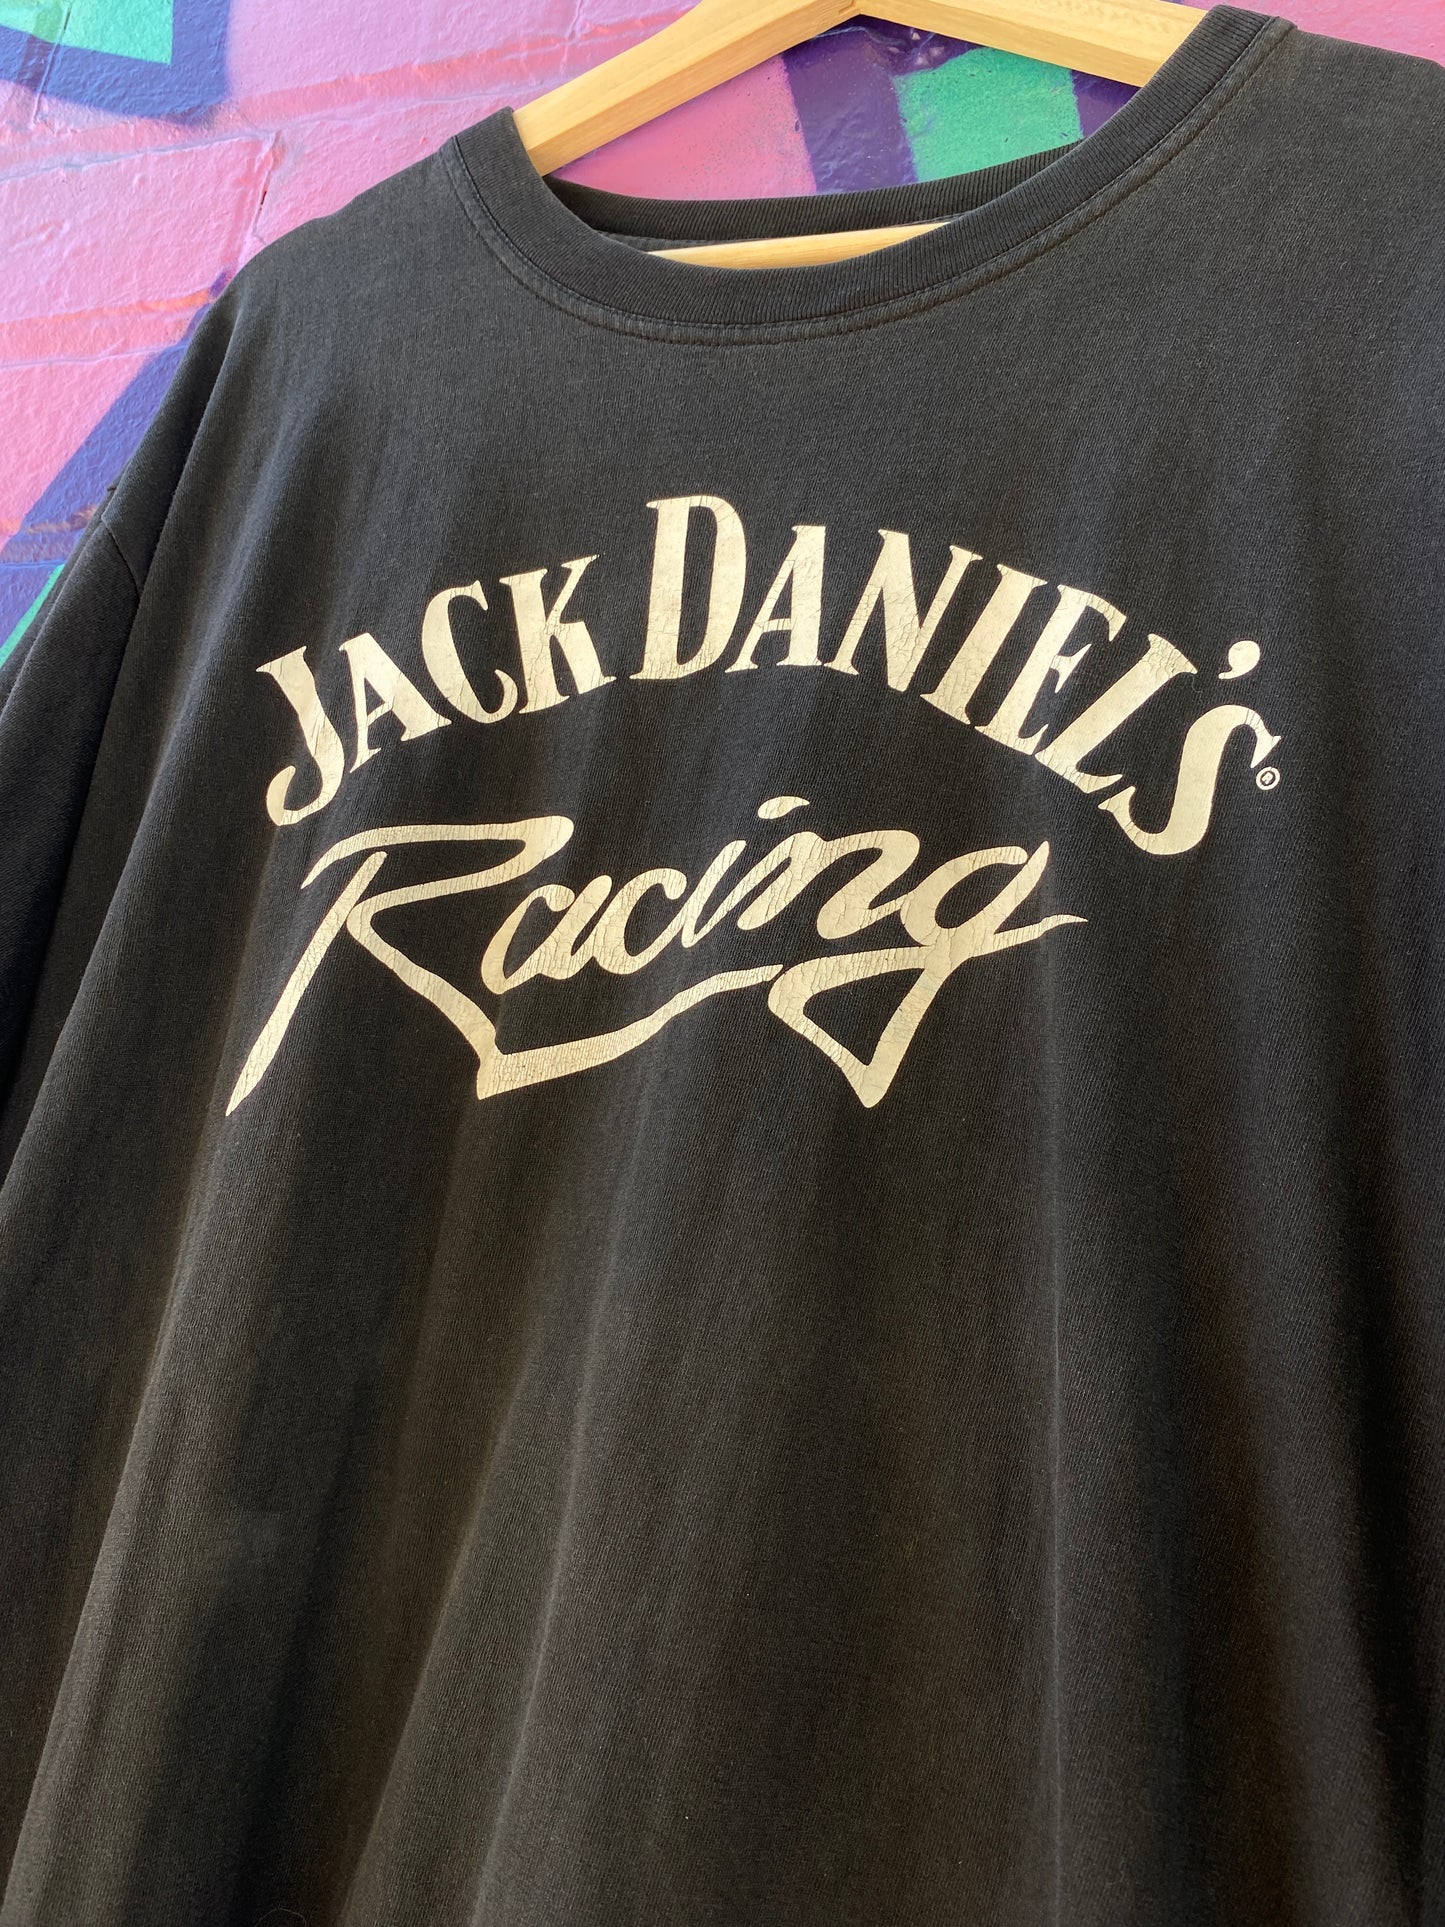 XL - Jack Daniels Racing Classic Tshirt